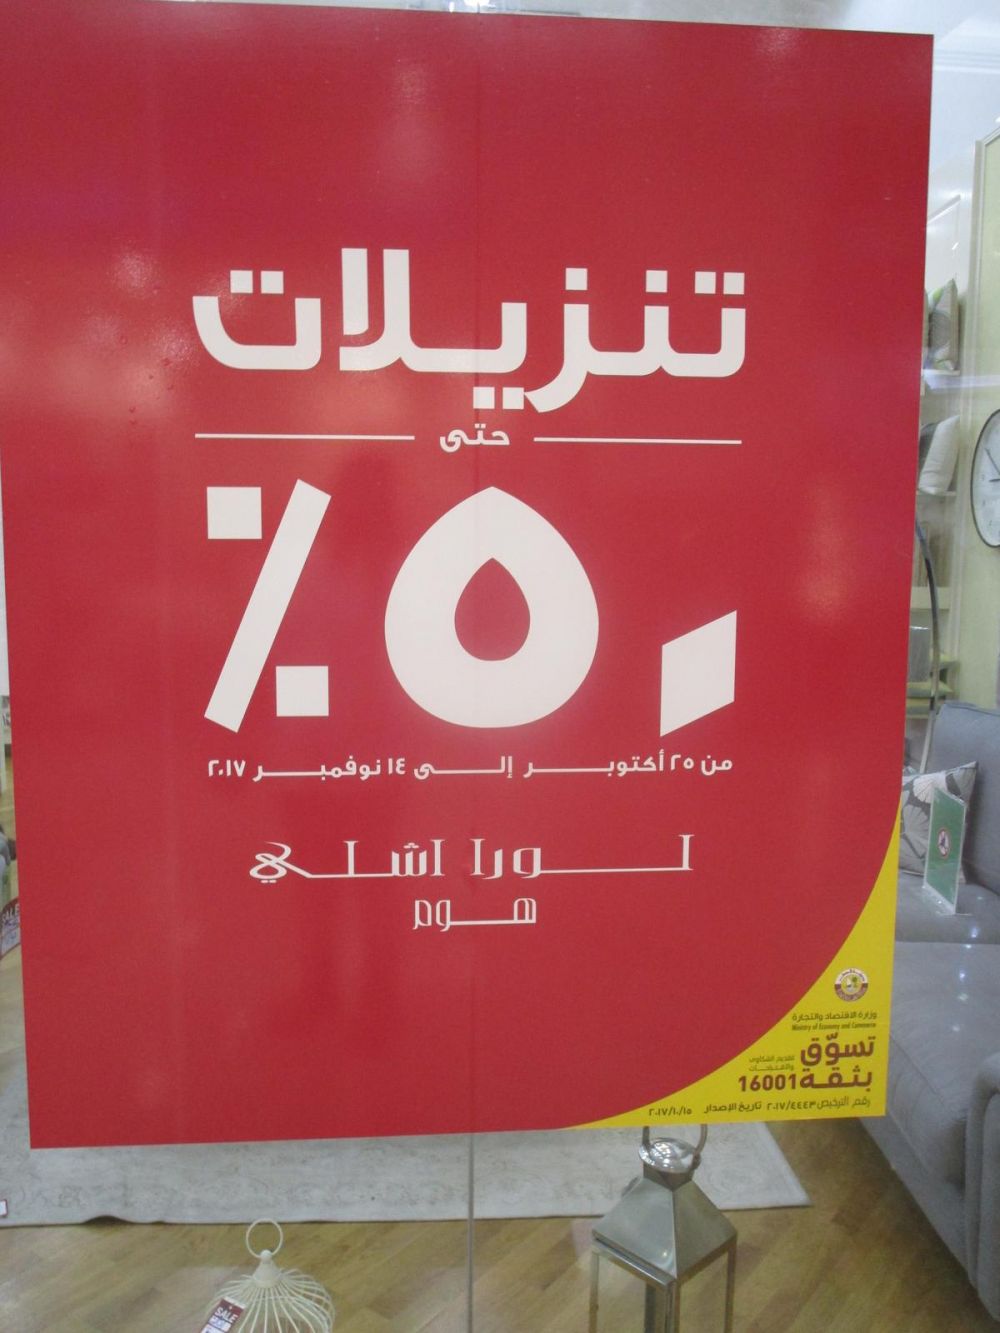 Sale Up To  50% Off - Laura ashley Qatar